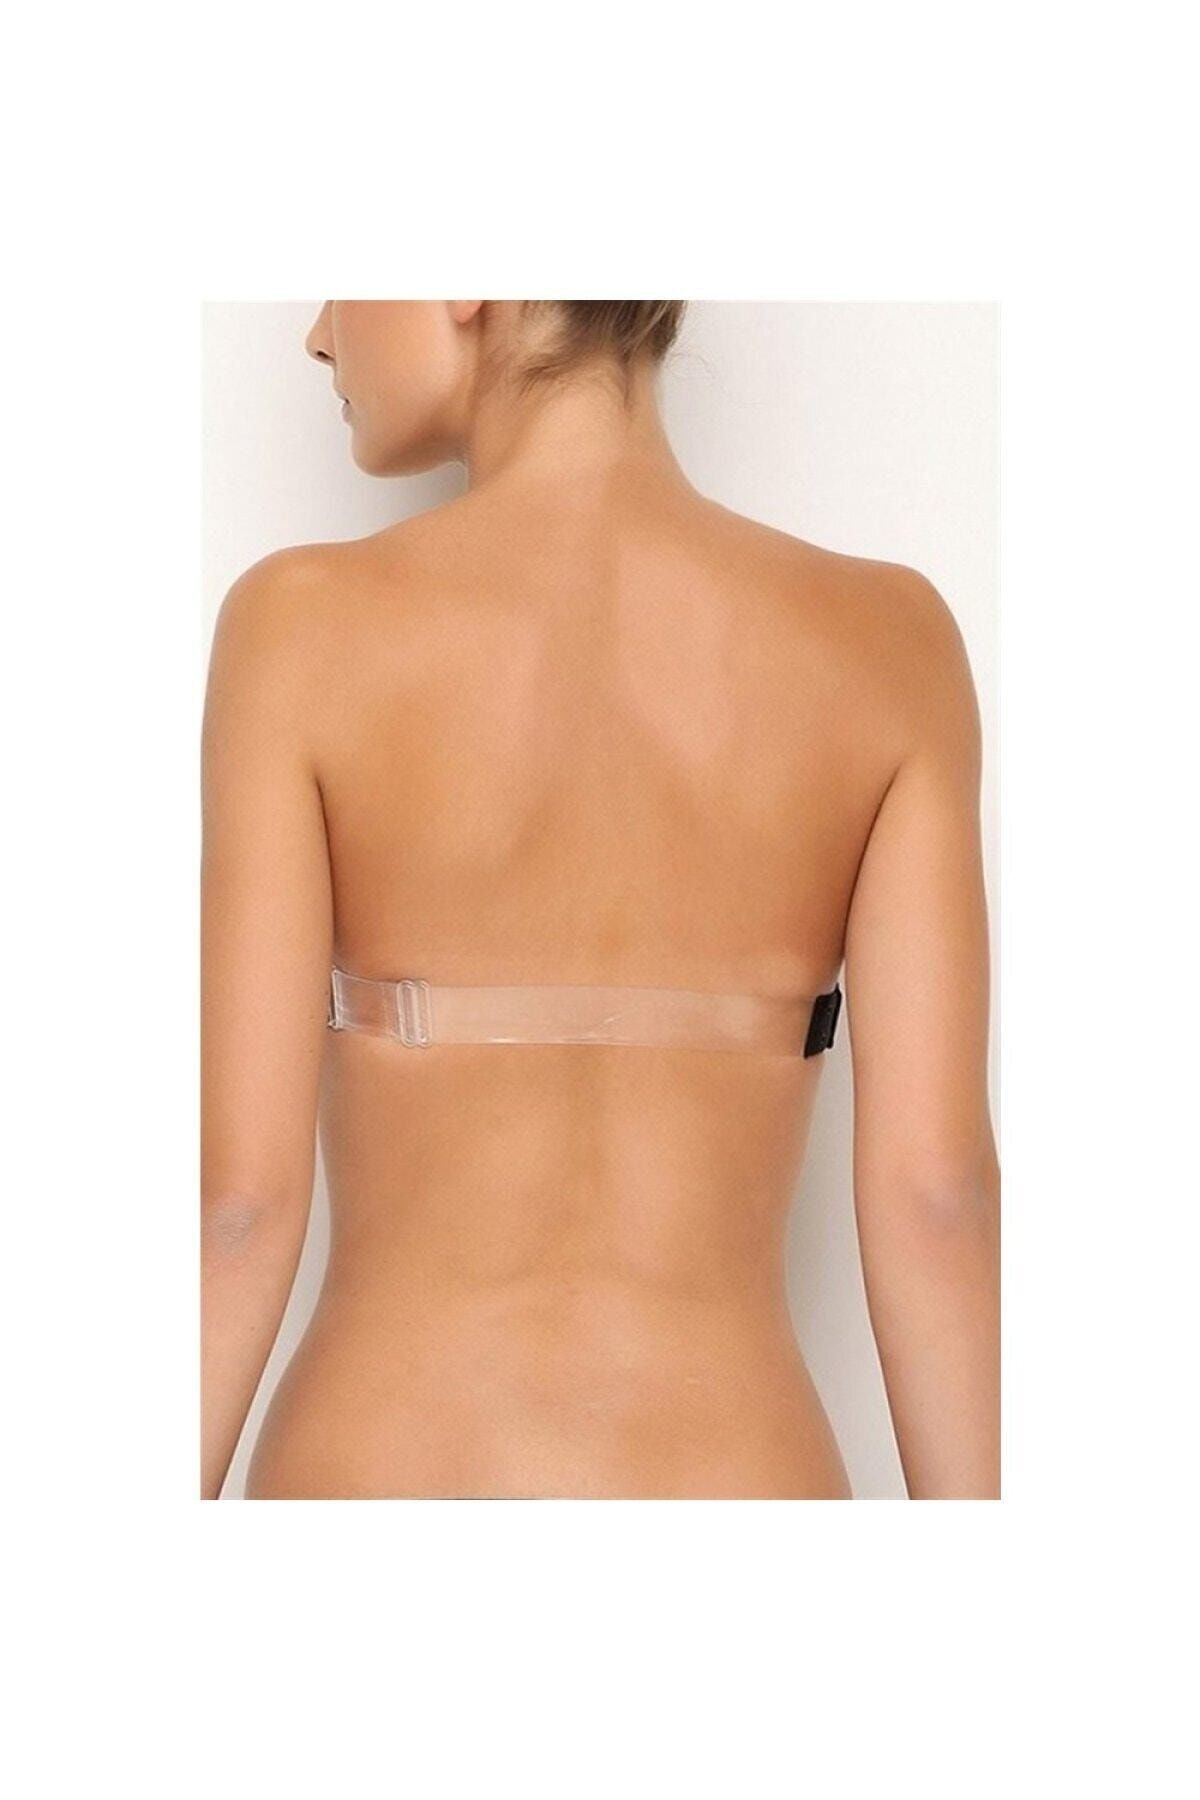 Nurteks Women's Unsupported Strapless Transparent Back Strap Bra